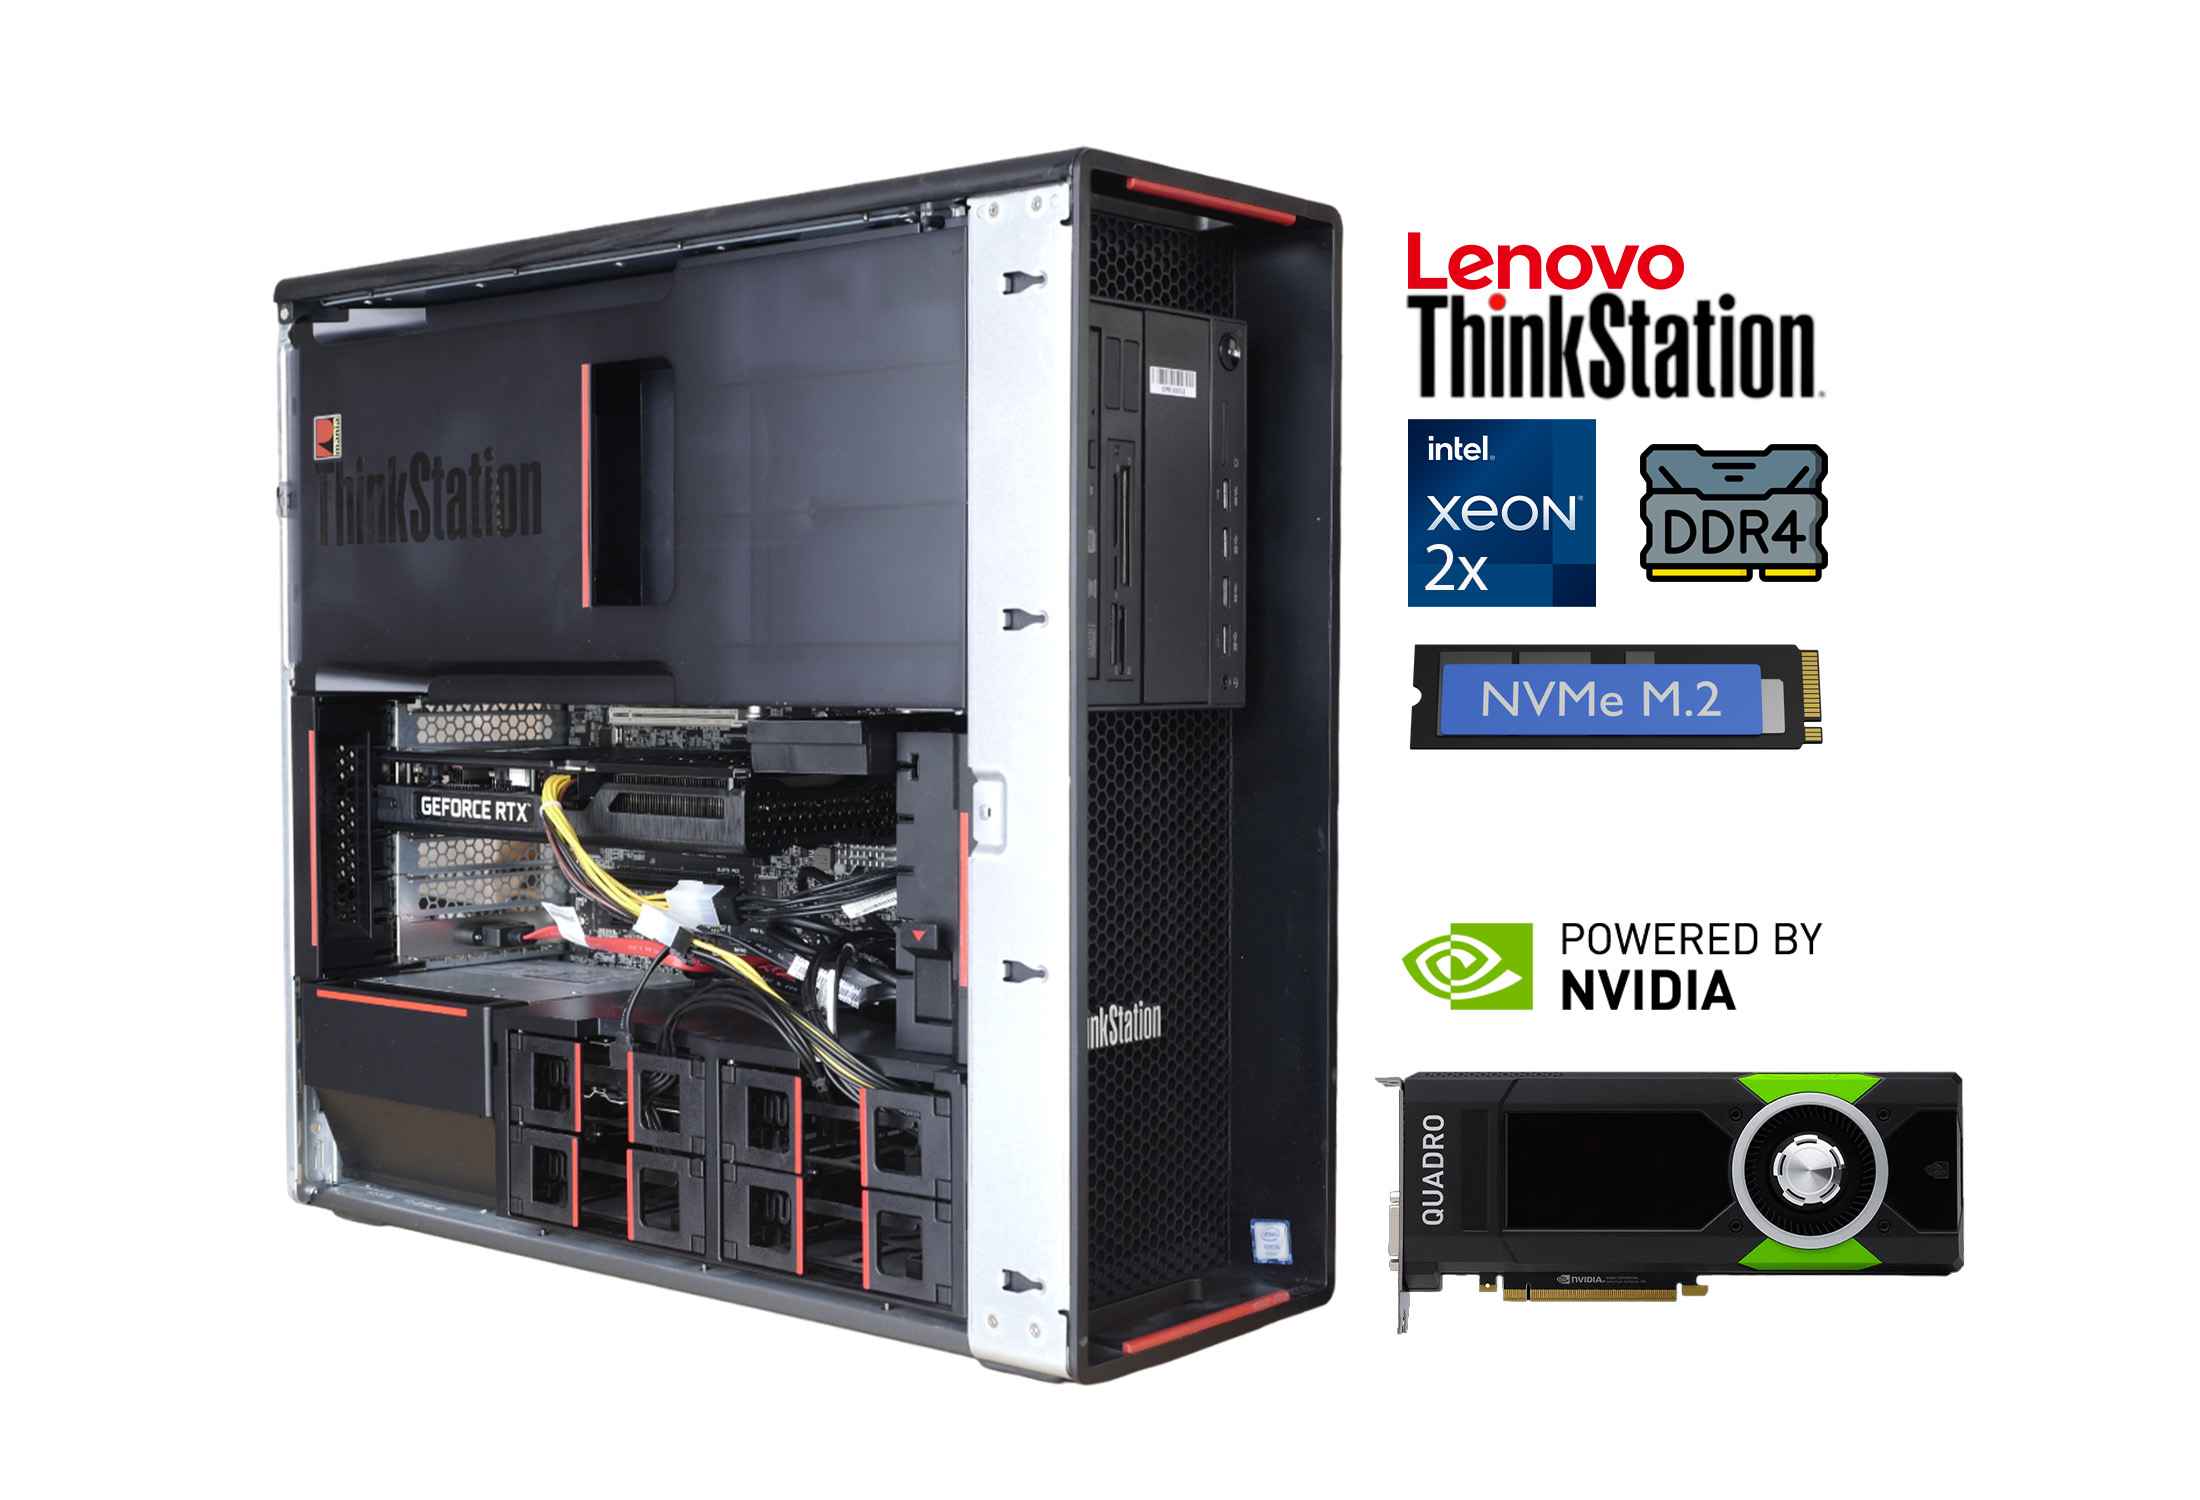 Lenovo Thinkstation P700 2x Xeon E5-2690v3 DDR4 NVMe Quadro P2000-qpfaz.jpeg